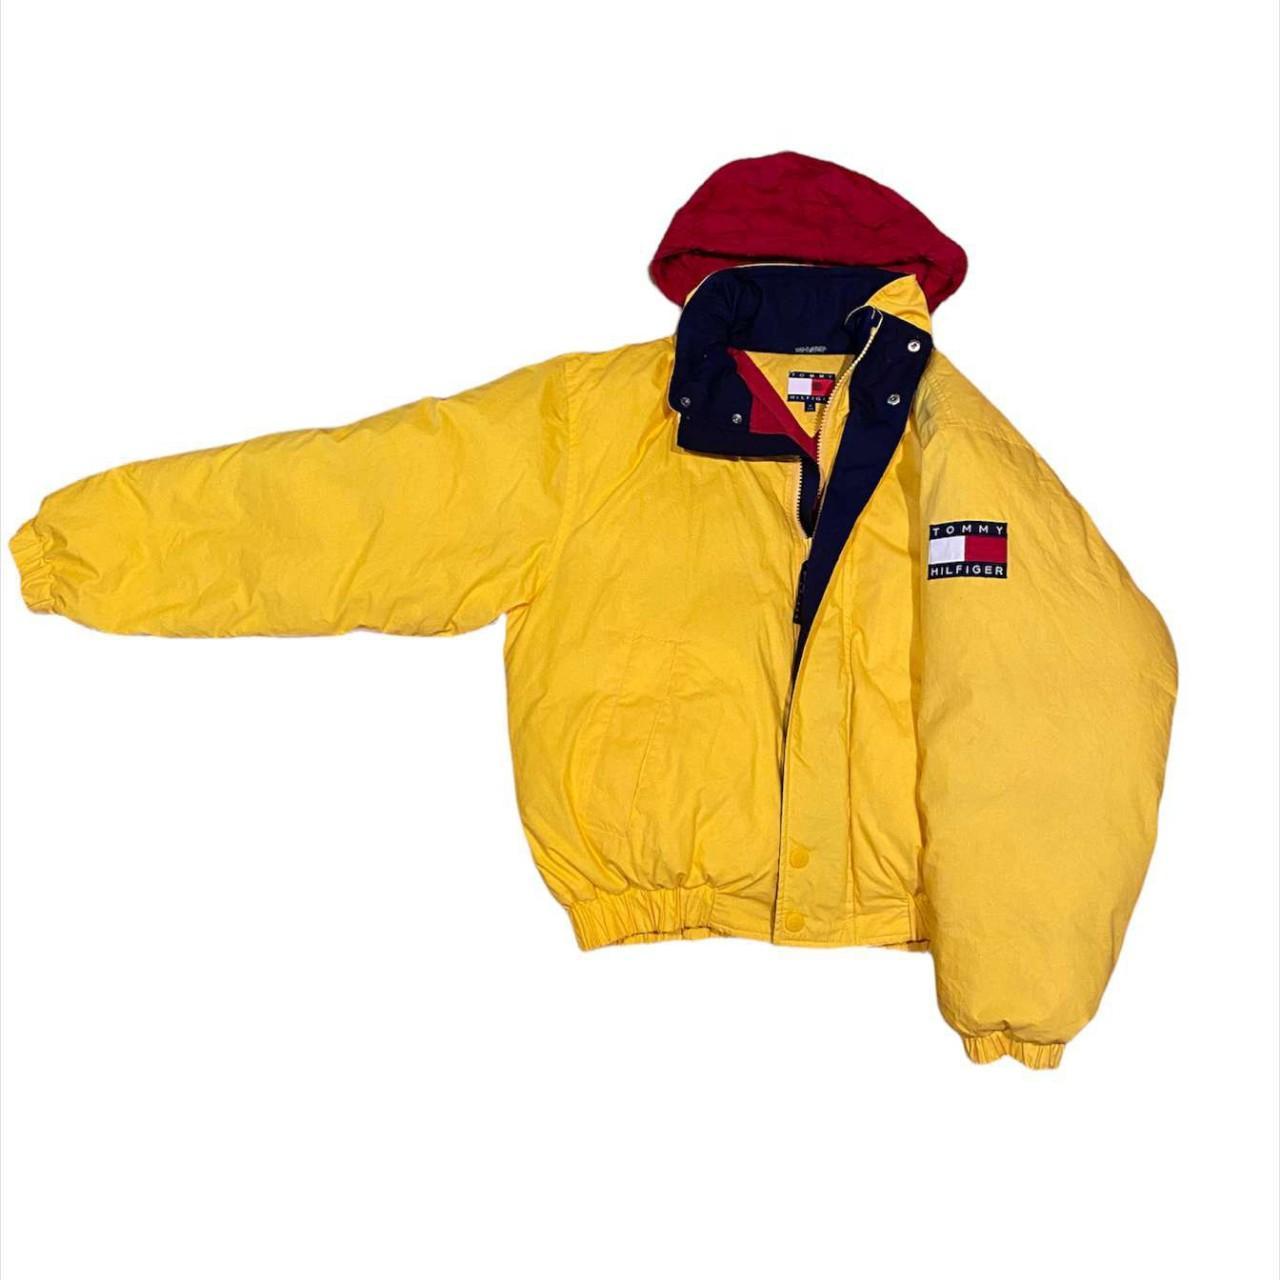 Tommy Hilfiger puffer jacket #polosport #tommyhilfiger - Depop